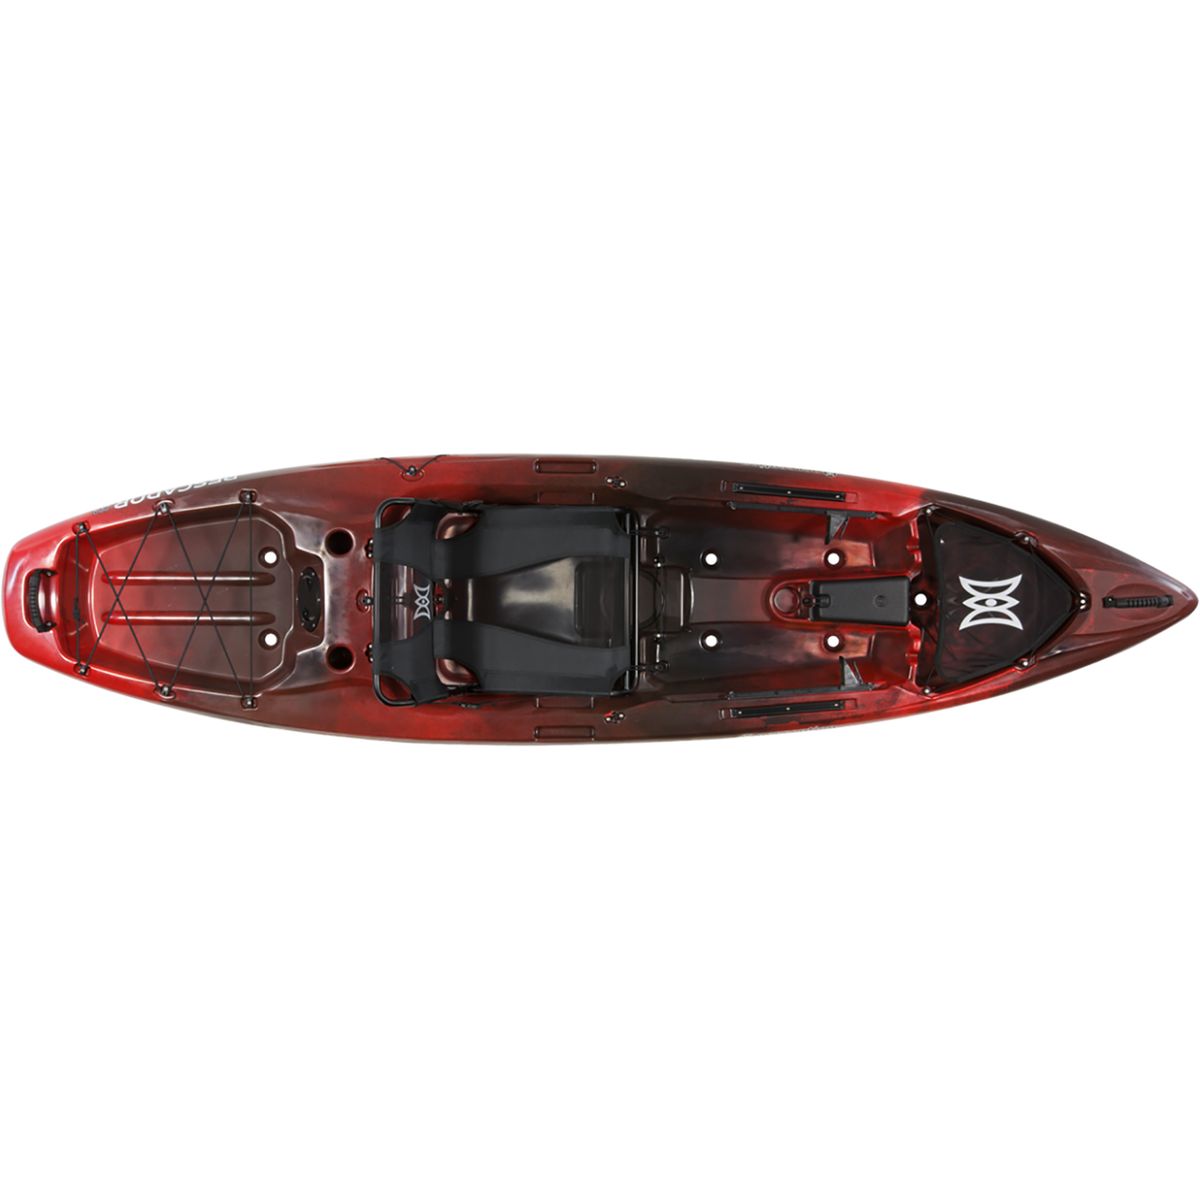 Color:Red Tiger Camo:Perception Pescador Pro 10.0 Kayak